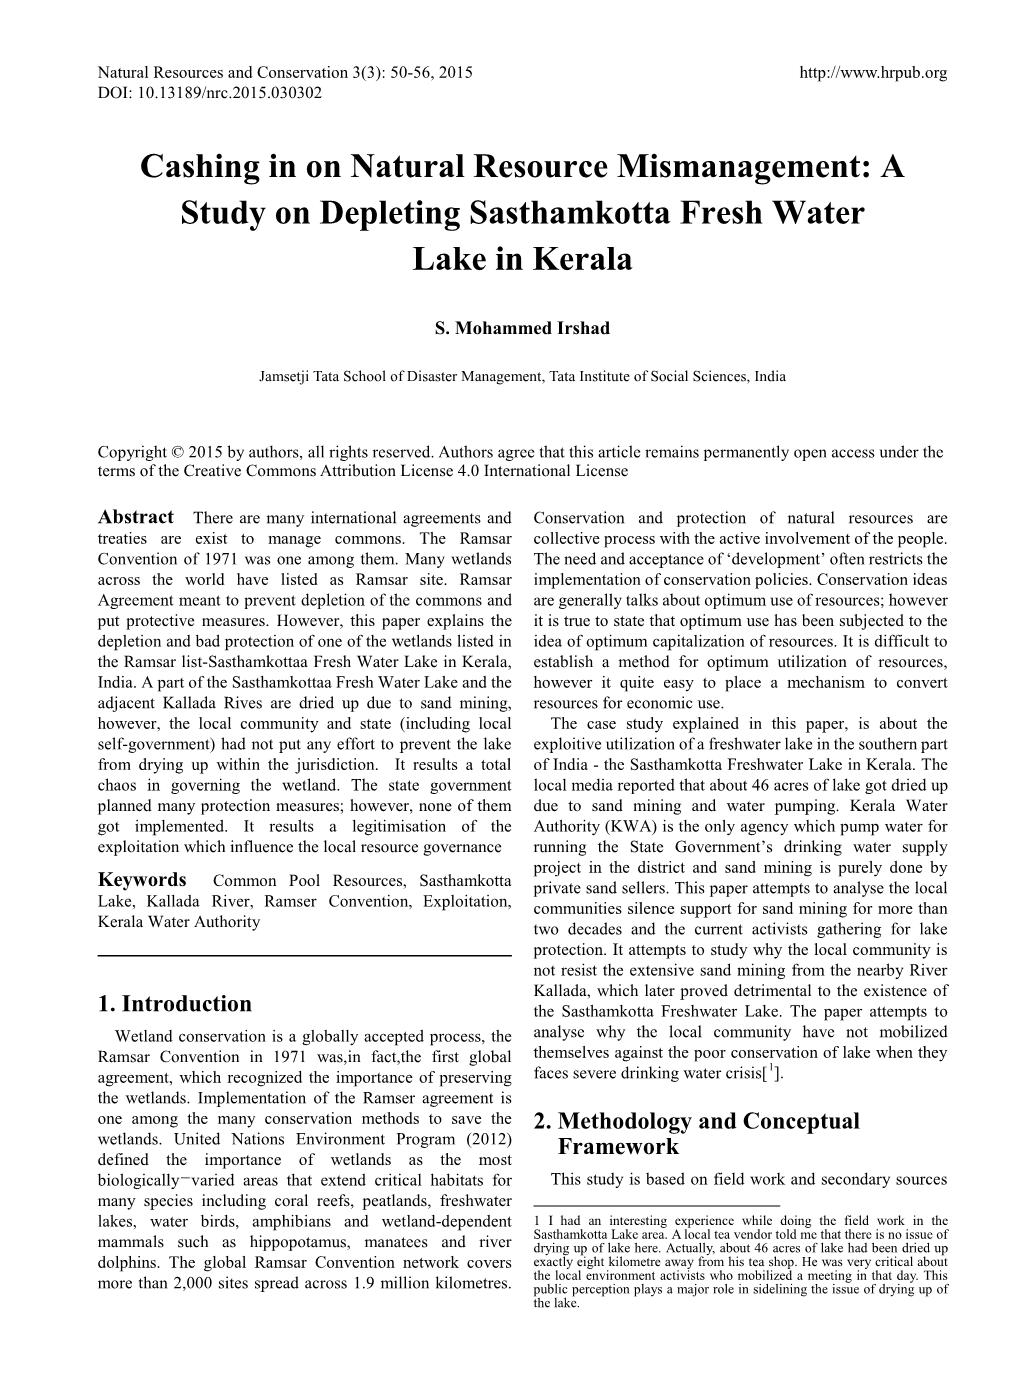 A Study on Depleting Sasthamkotta Fresh Water Lake in Kerala